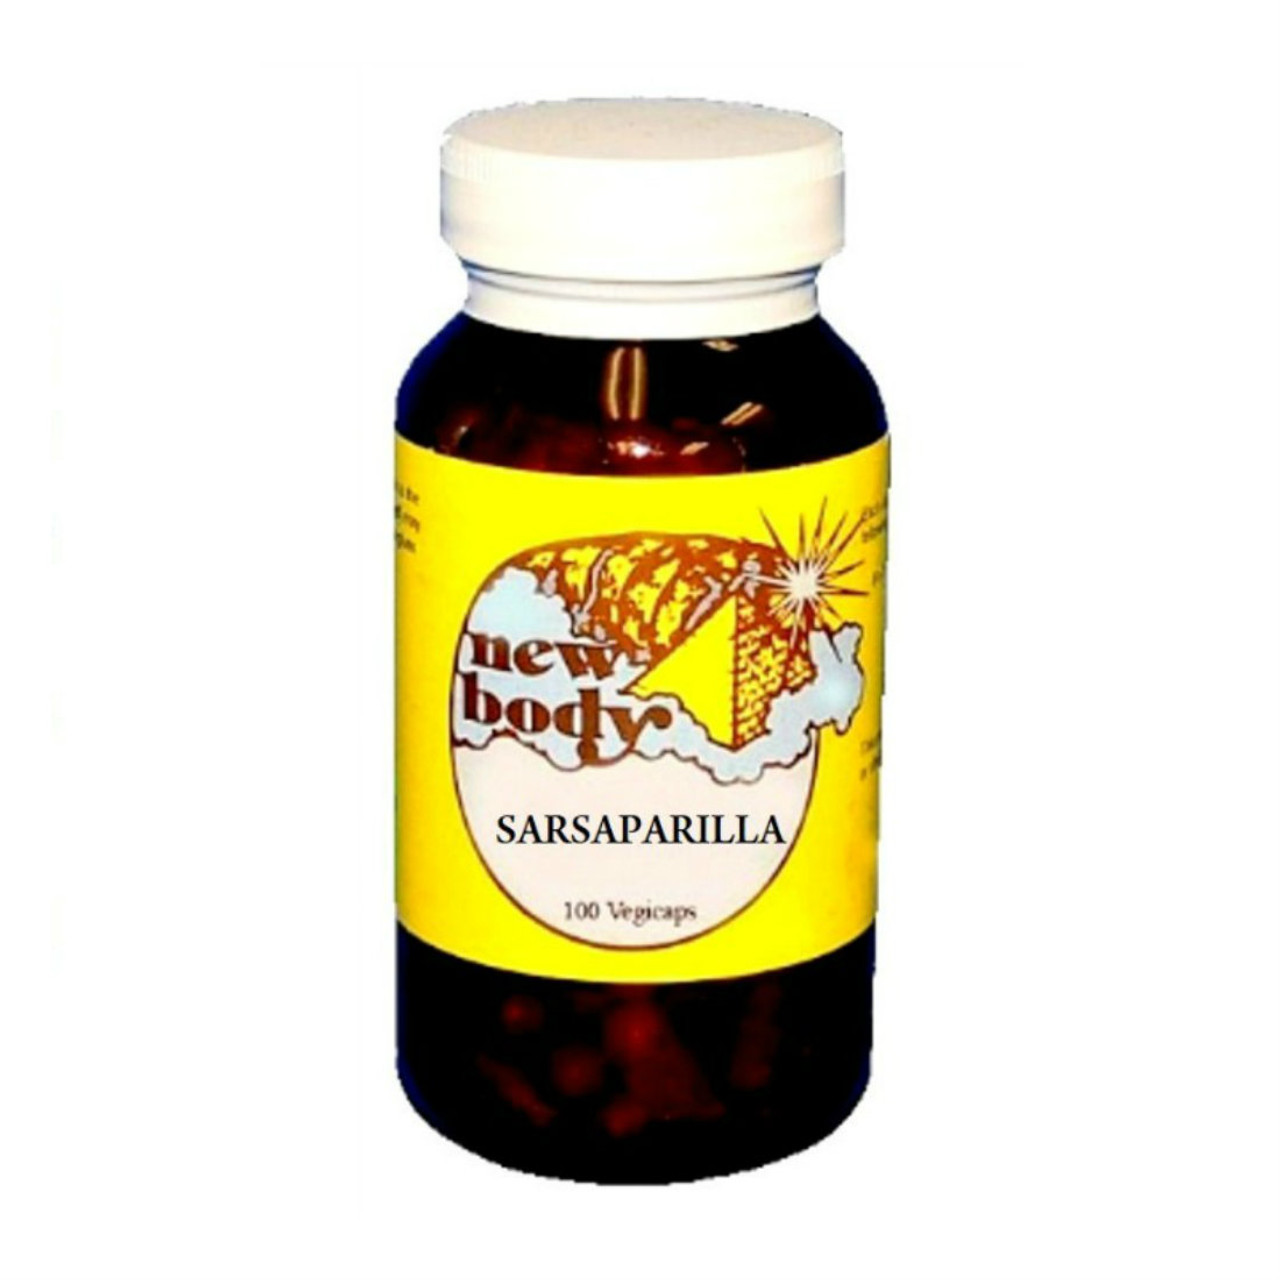 Sarsaparilla Root C/S - Herb To Body